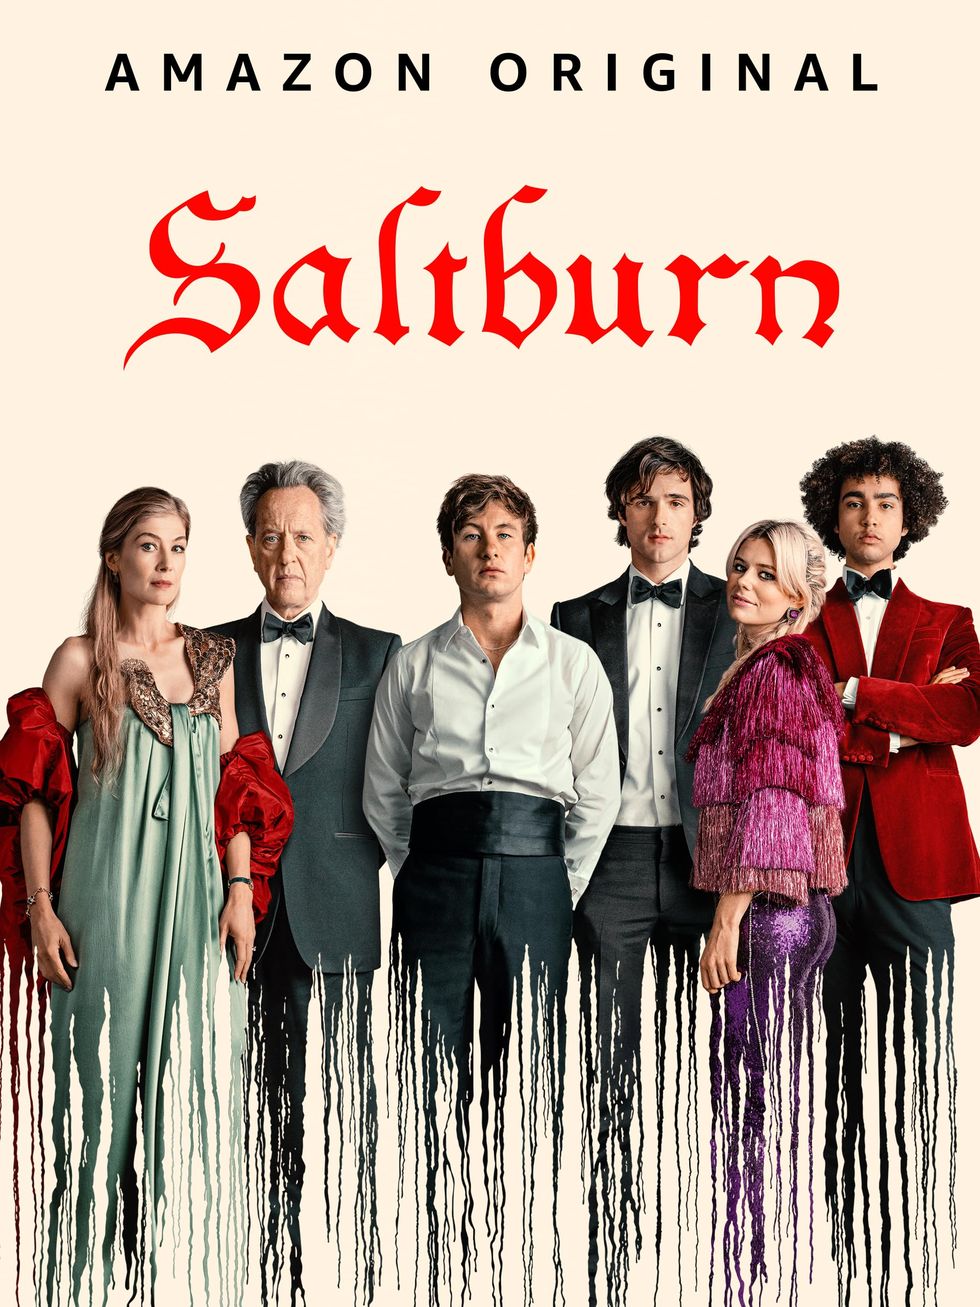 Watch 'Saltburn' on Prime Video